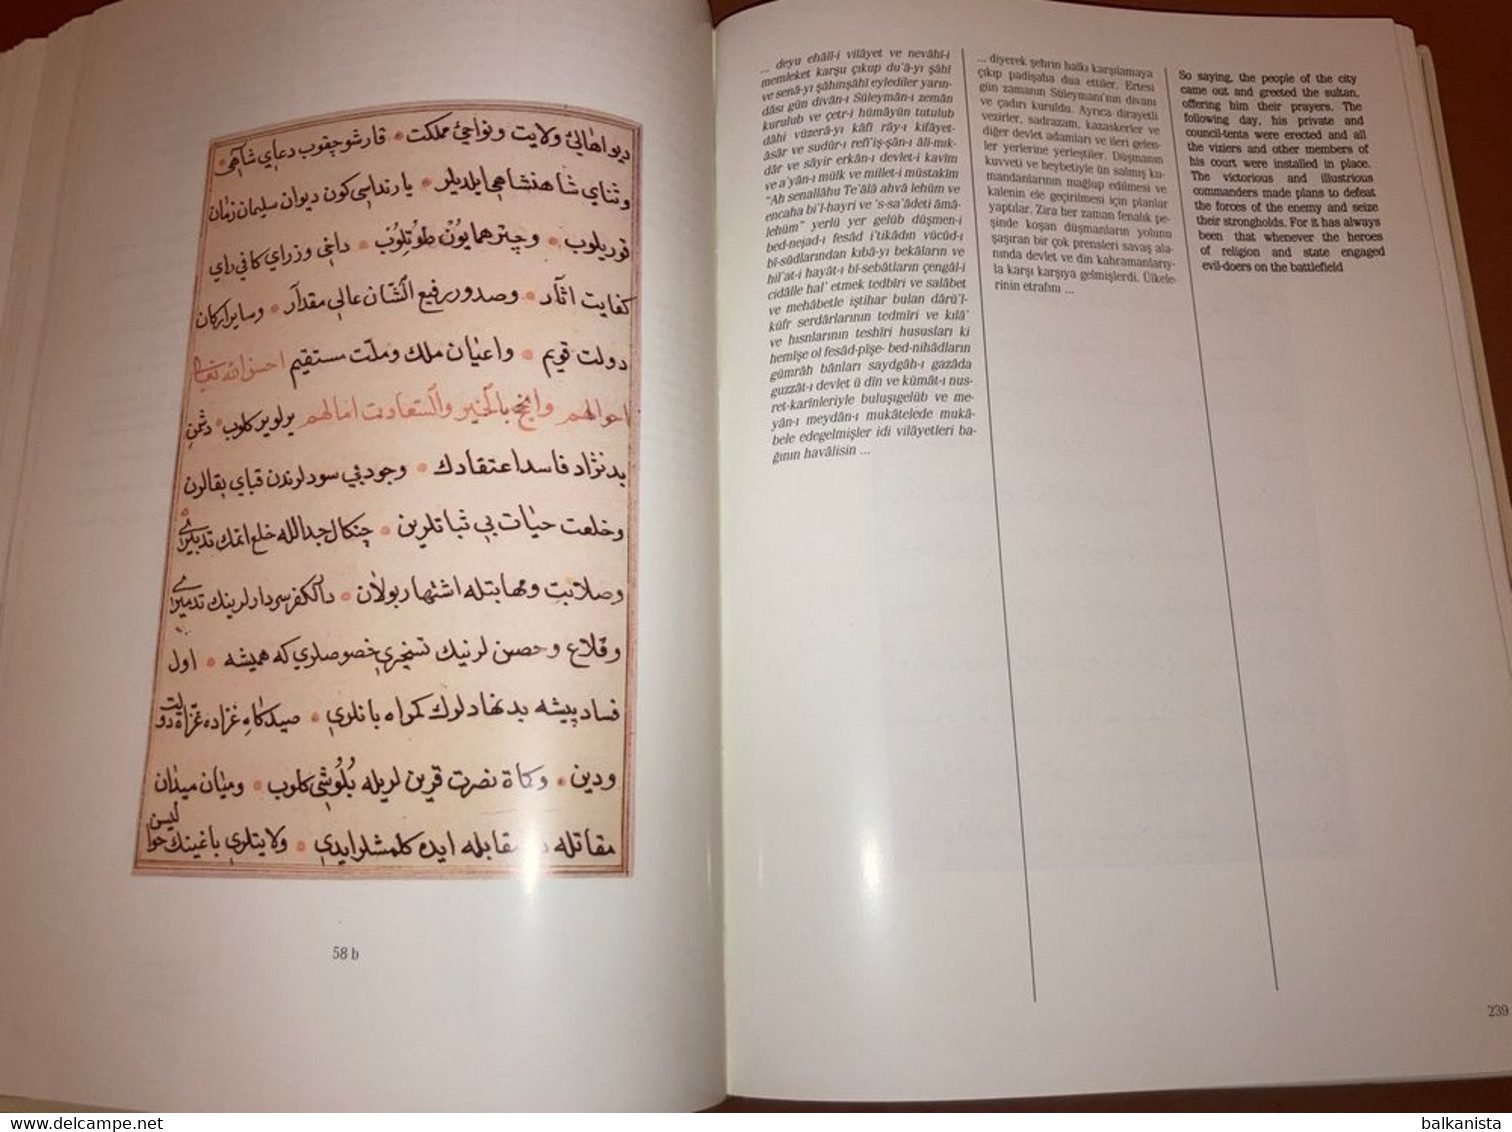 Suleymanname History of Comquest Siklos Usturgon Istol Belgrad Turkish English